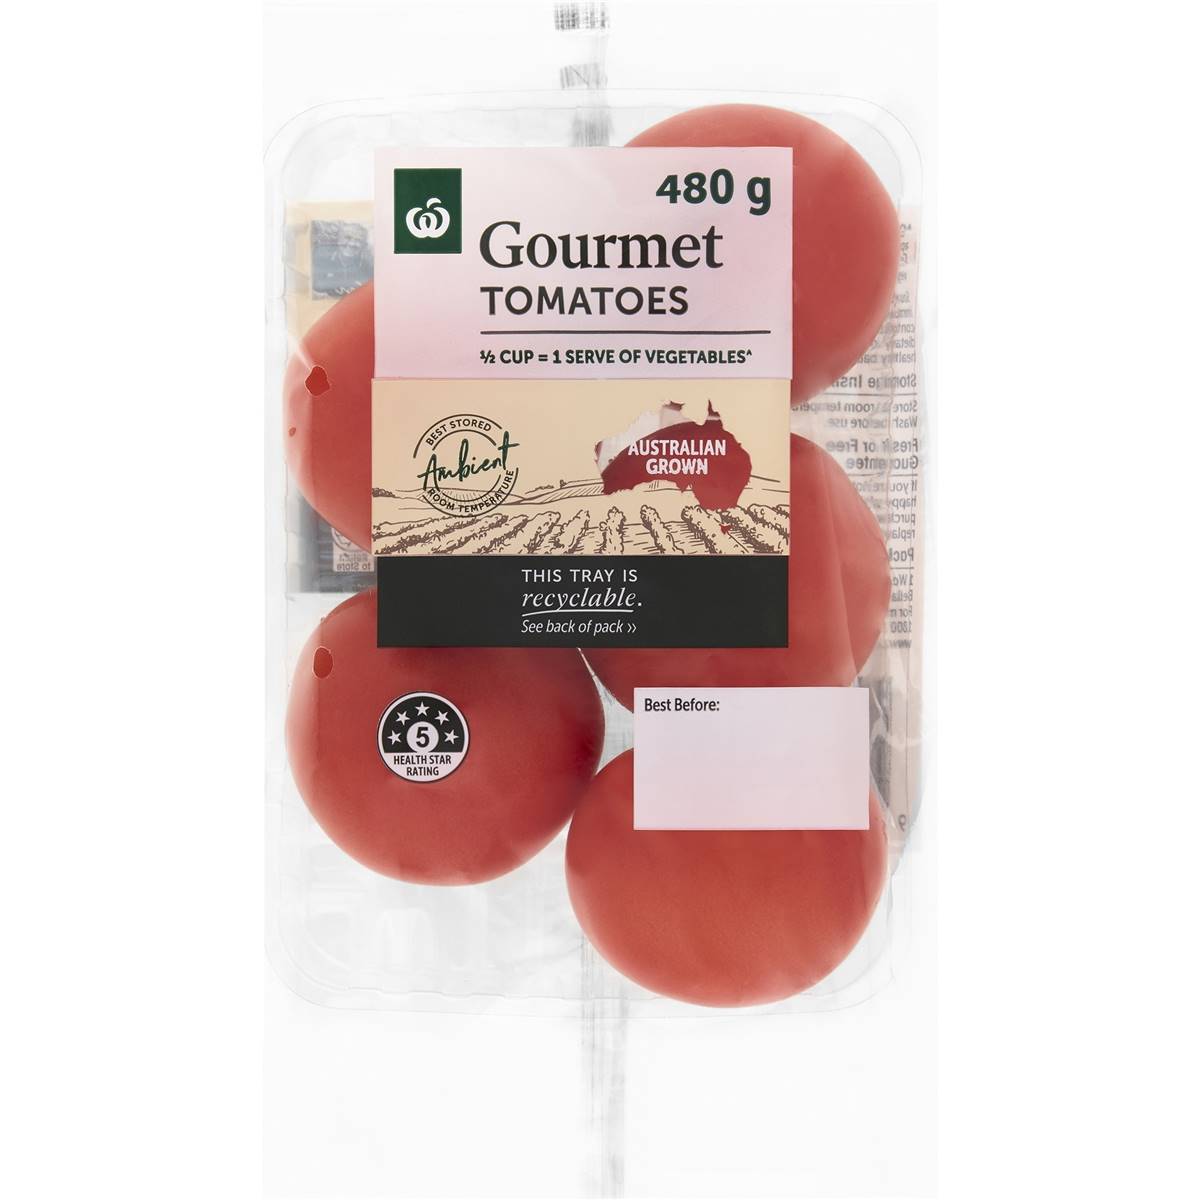 Calories in Select Gourmet Tomatoes